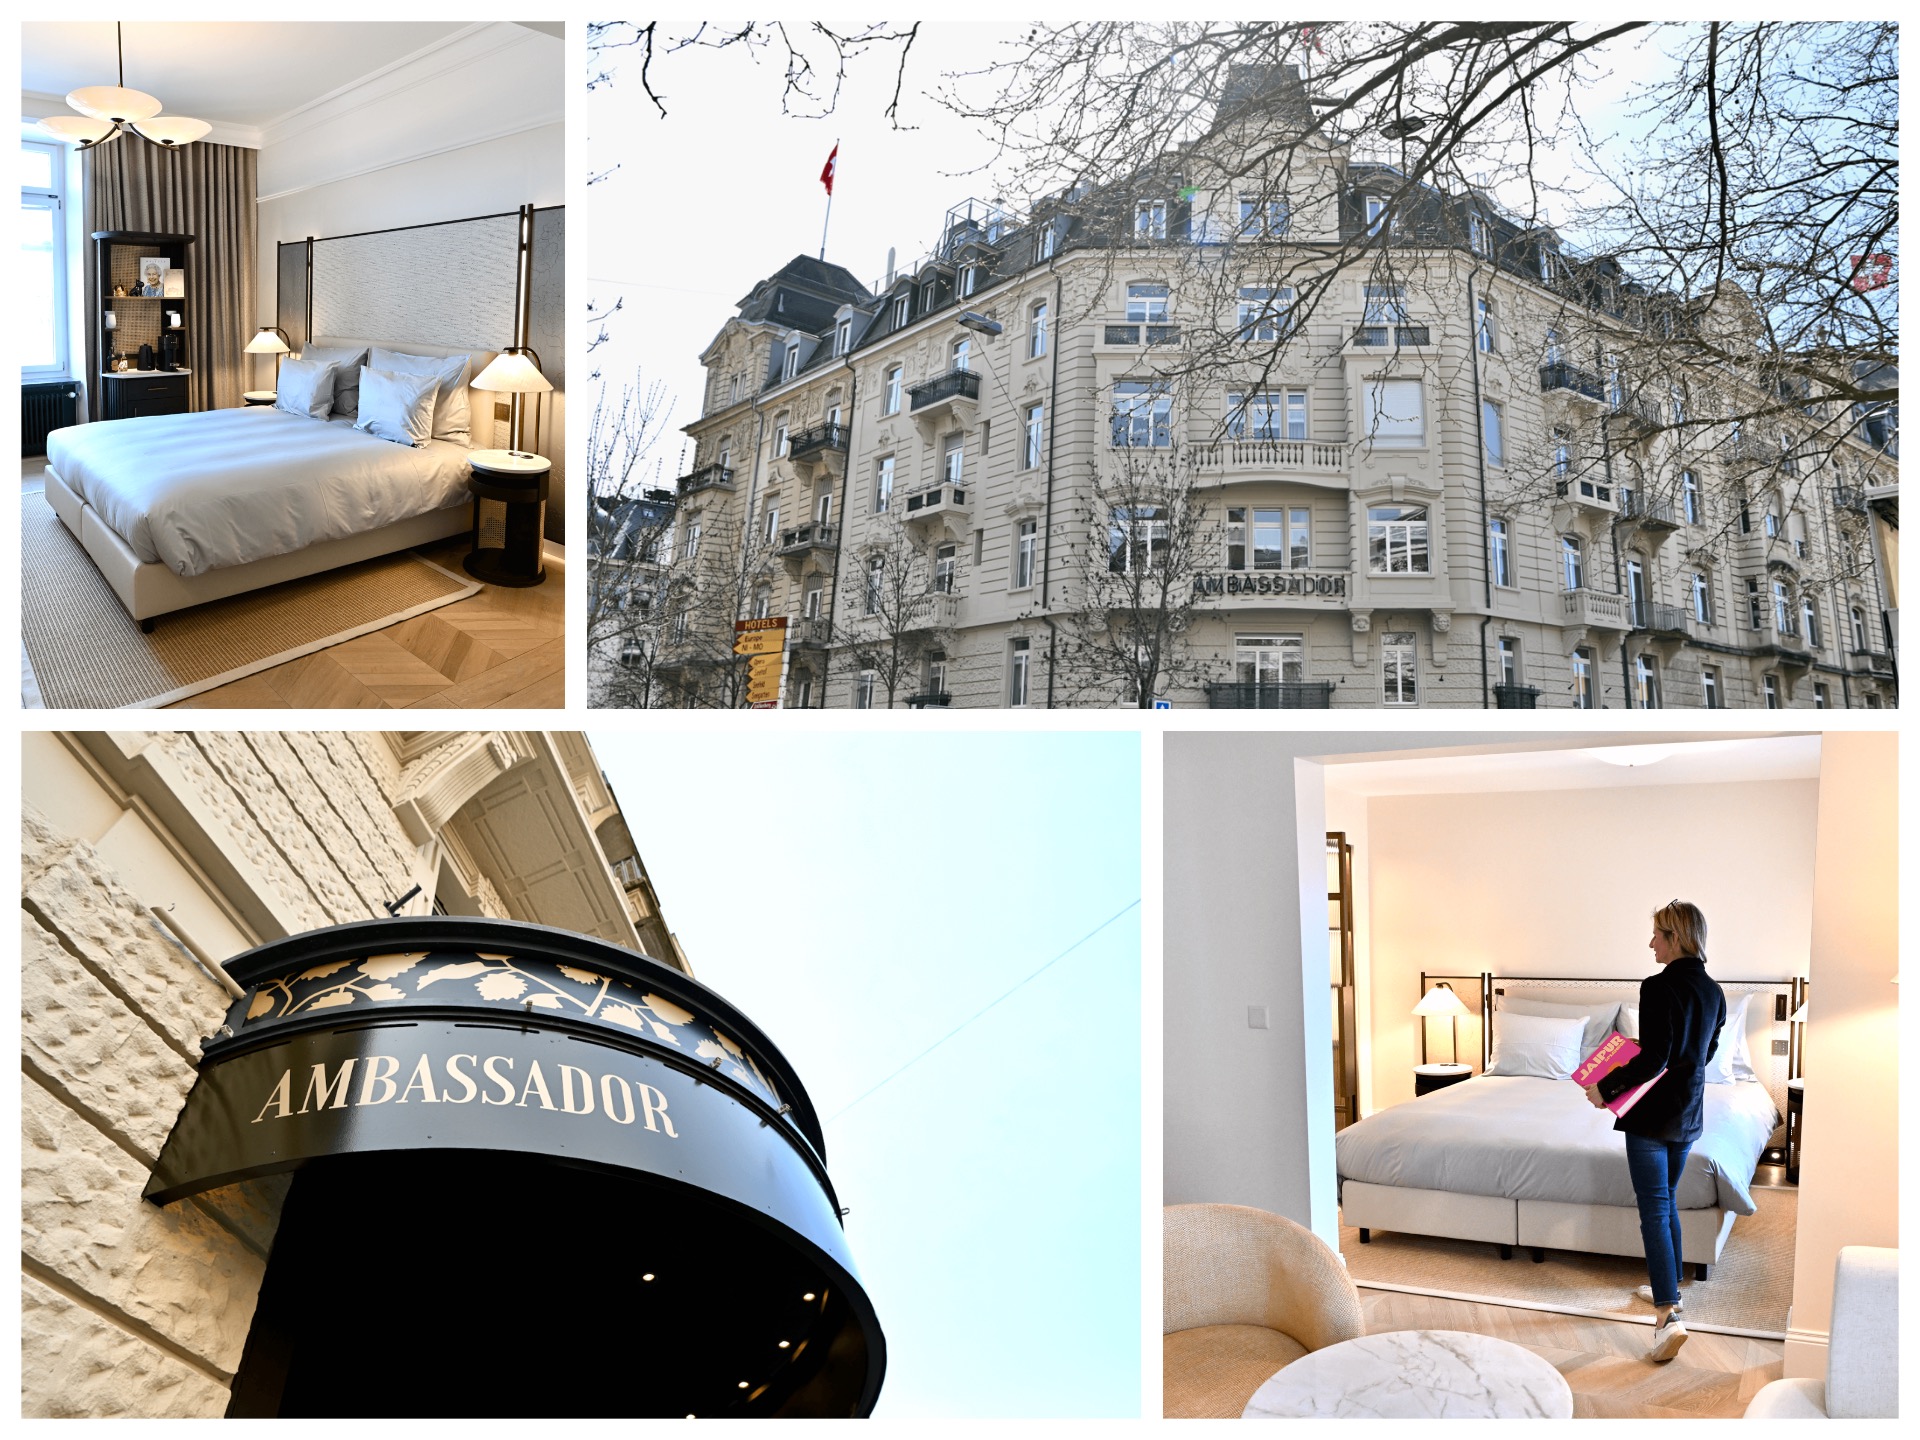 Ambassador Hotel Zürich - Newly Revamped to Tell a Story